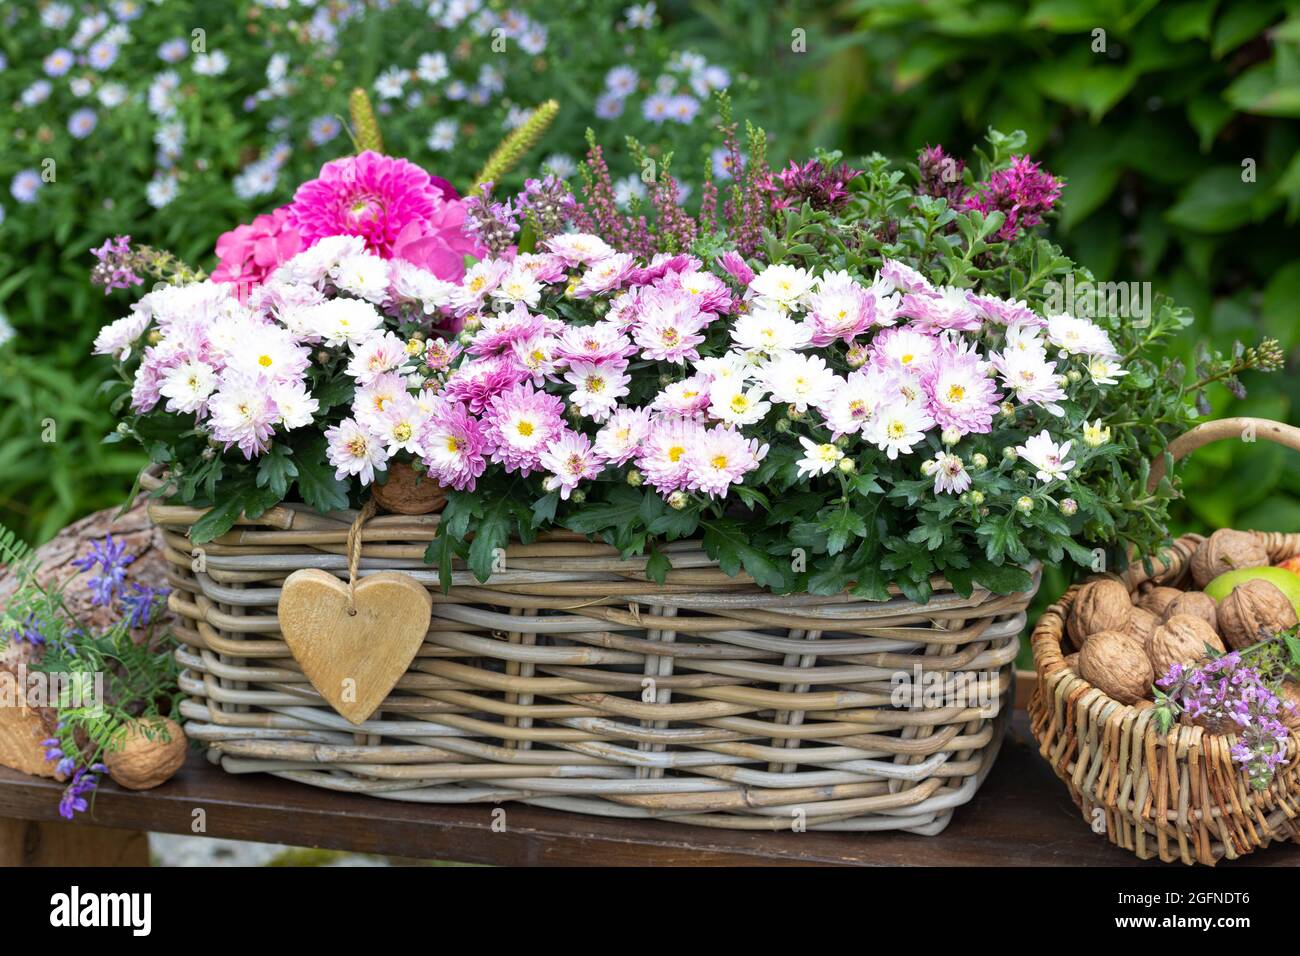 chtysanthums bianco e viola in cestino in giardino Foto Stock